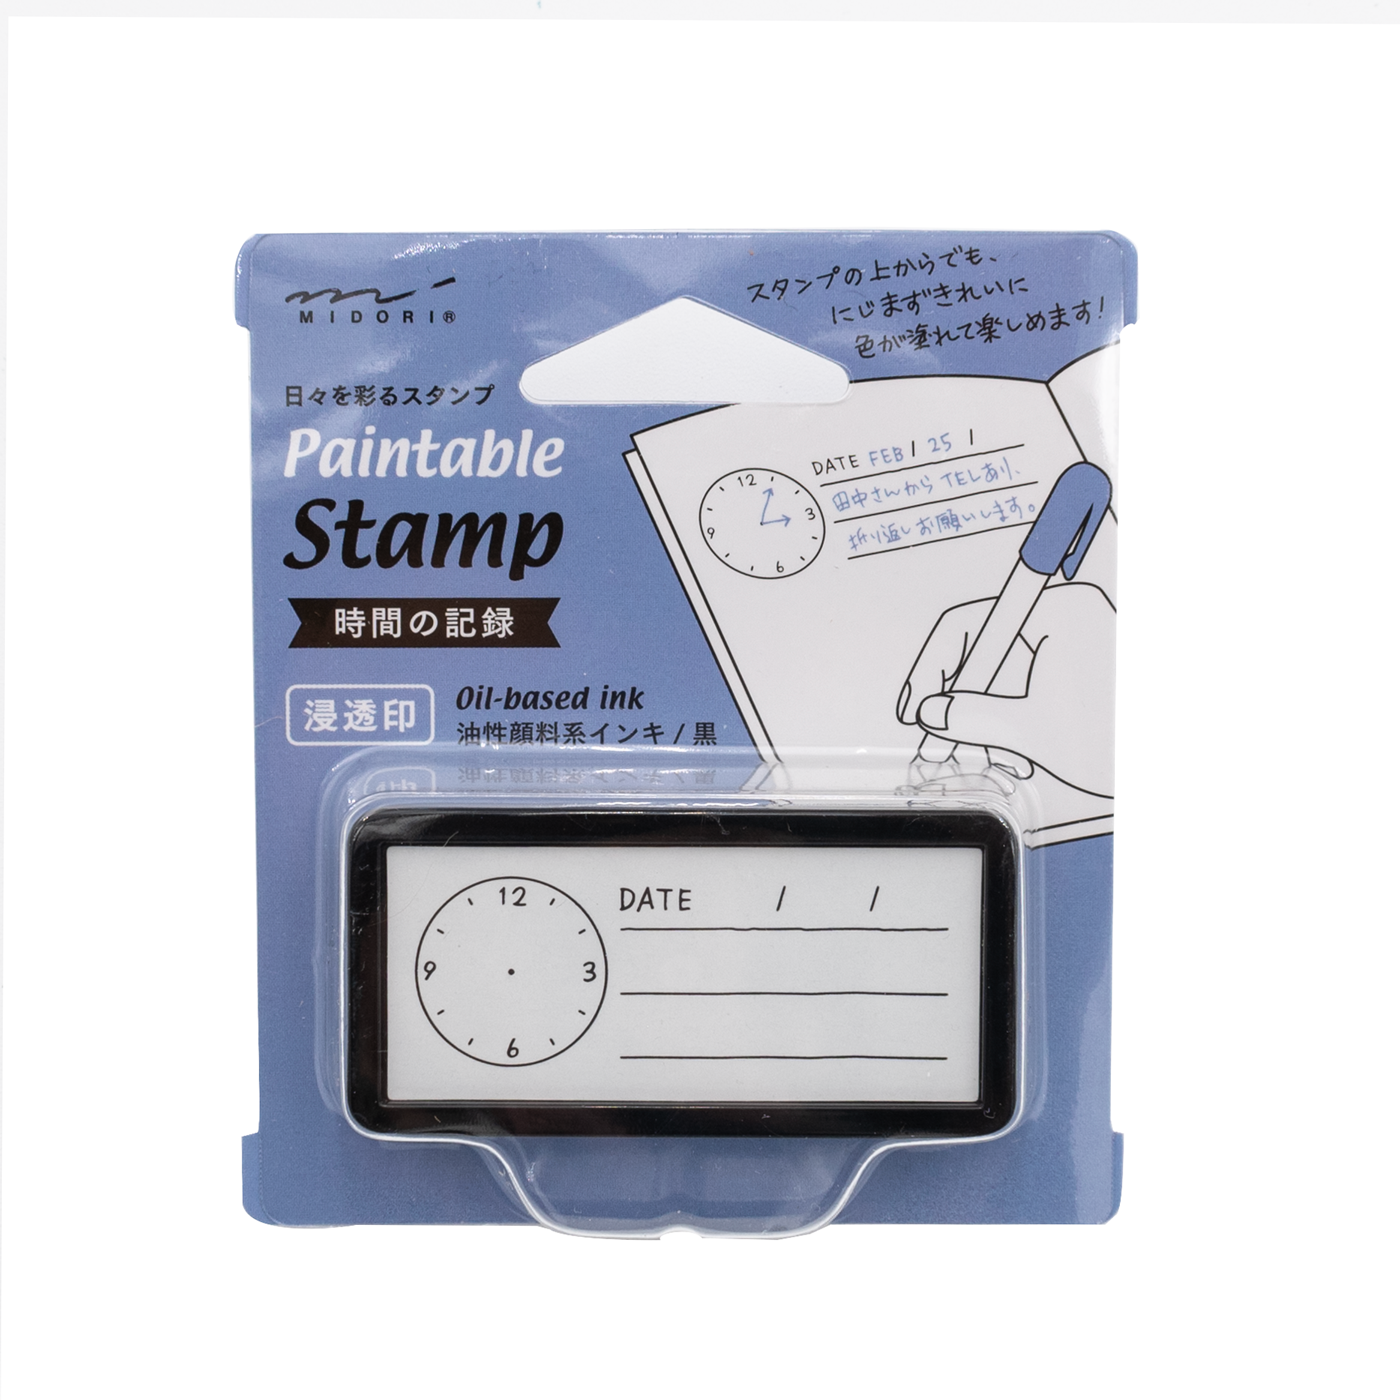 Midori Paintable Stamp - Half Size Time